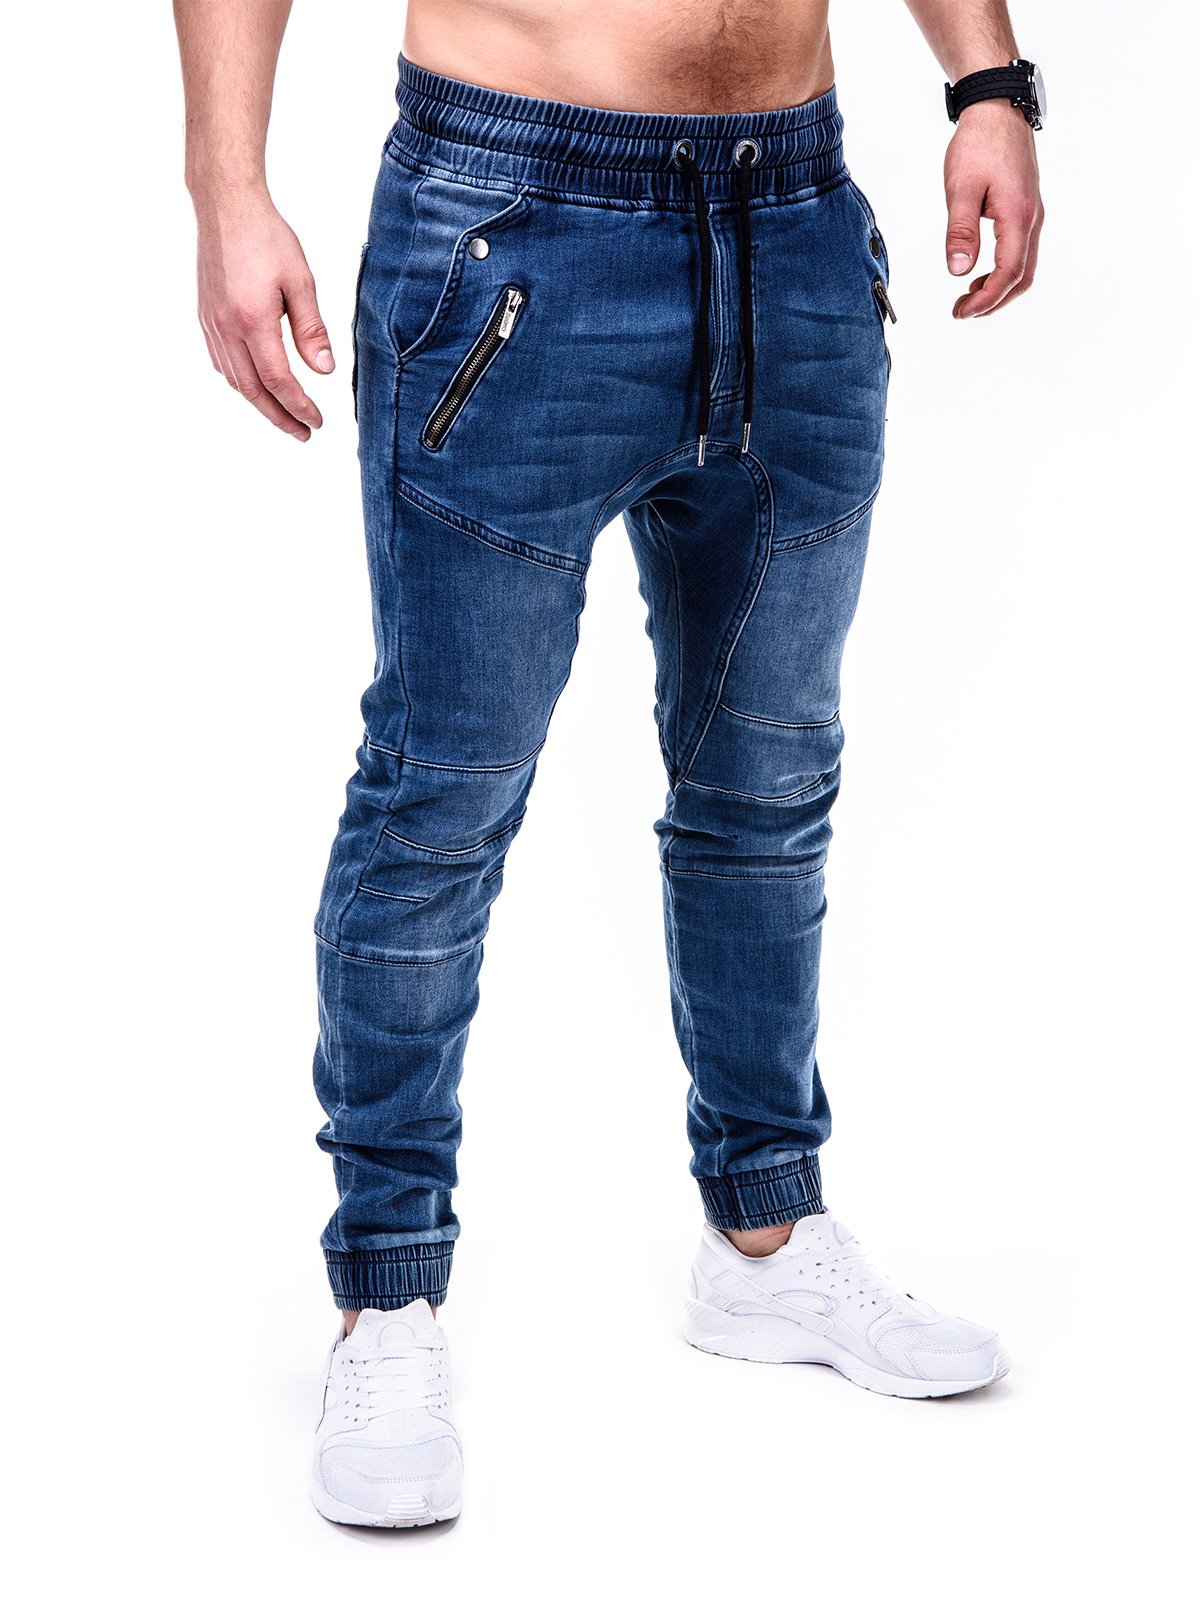 Levi's Jogger Jeans Discount Compare, Save 67% | jlcatj.gob.mx